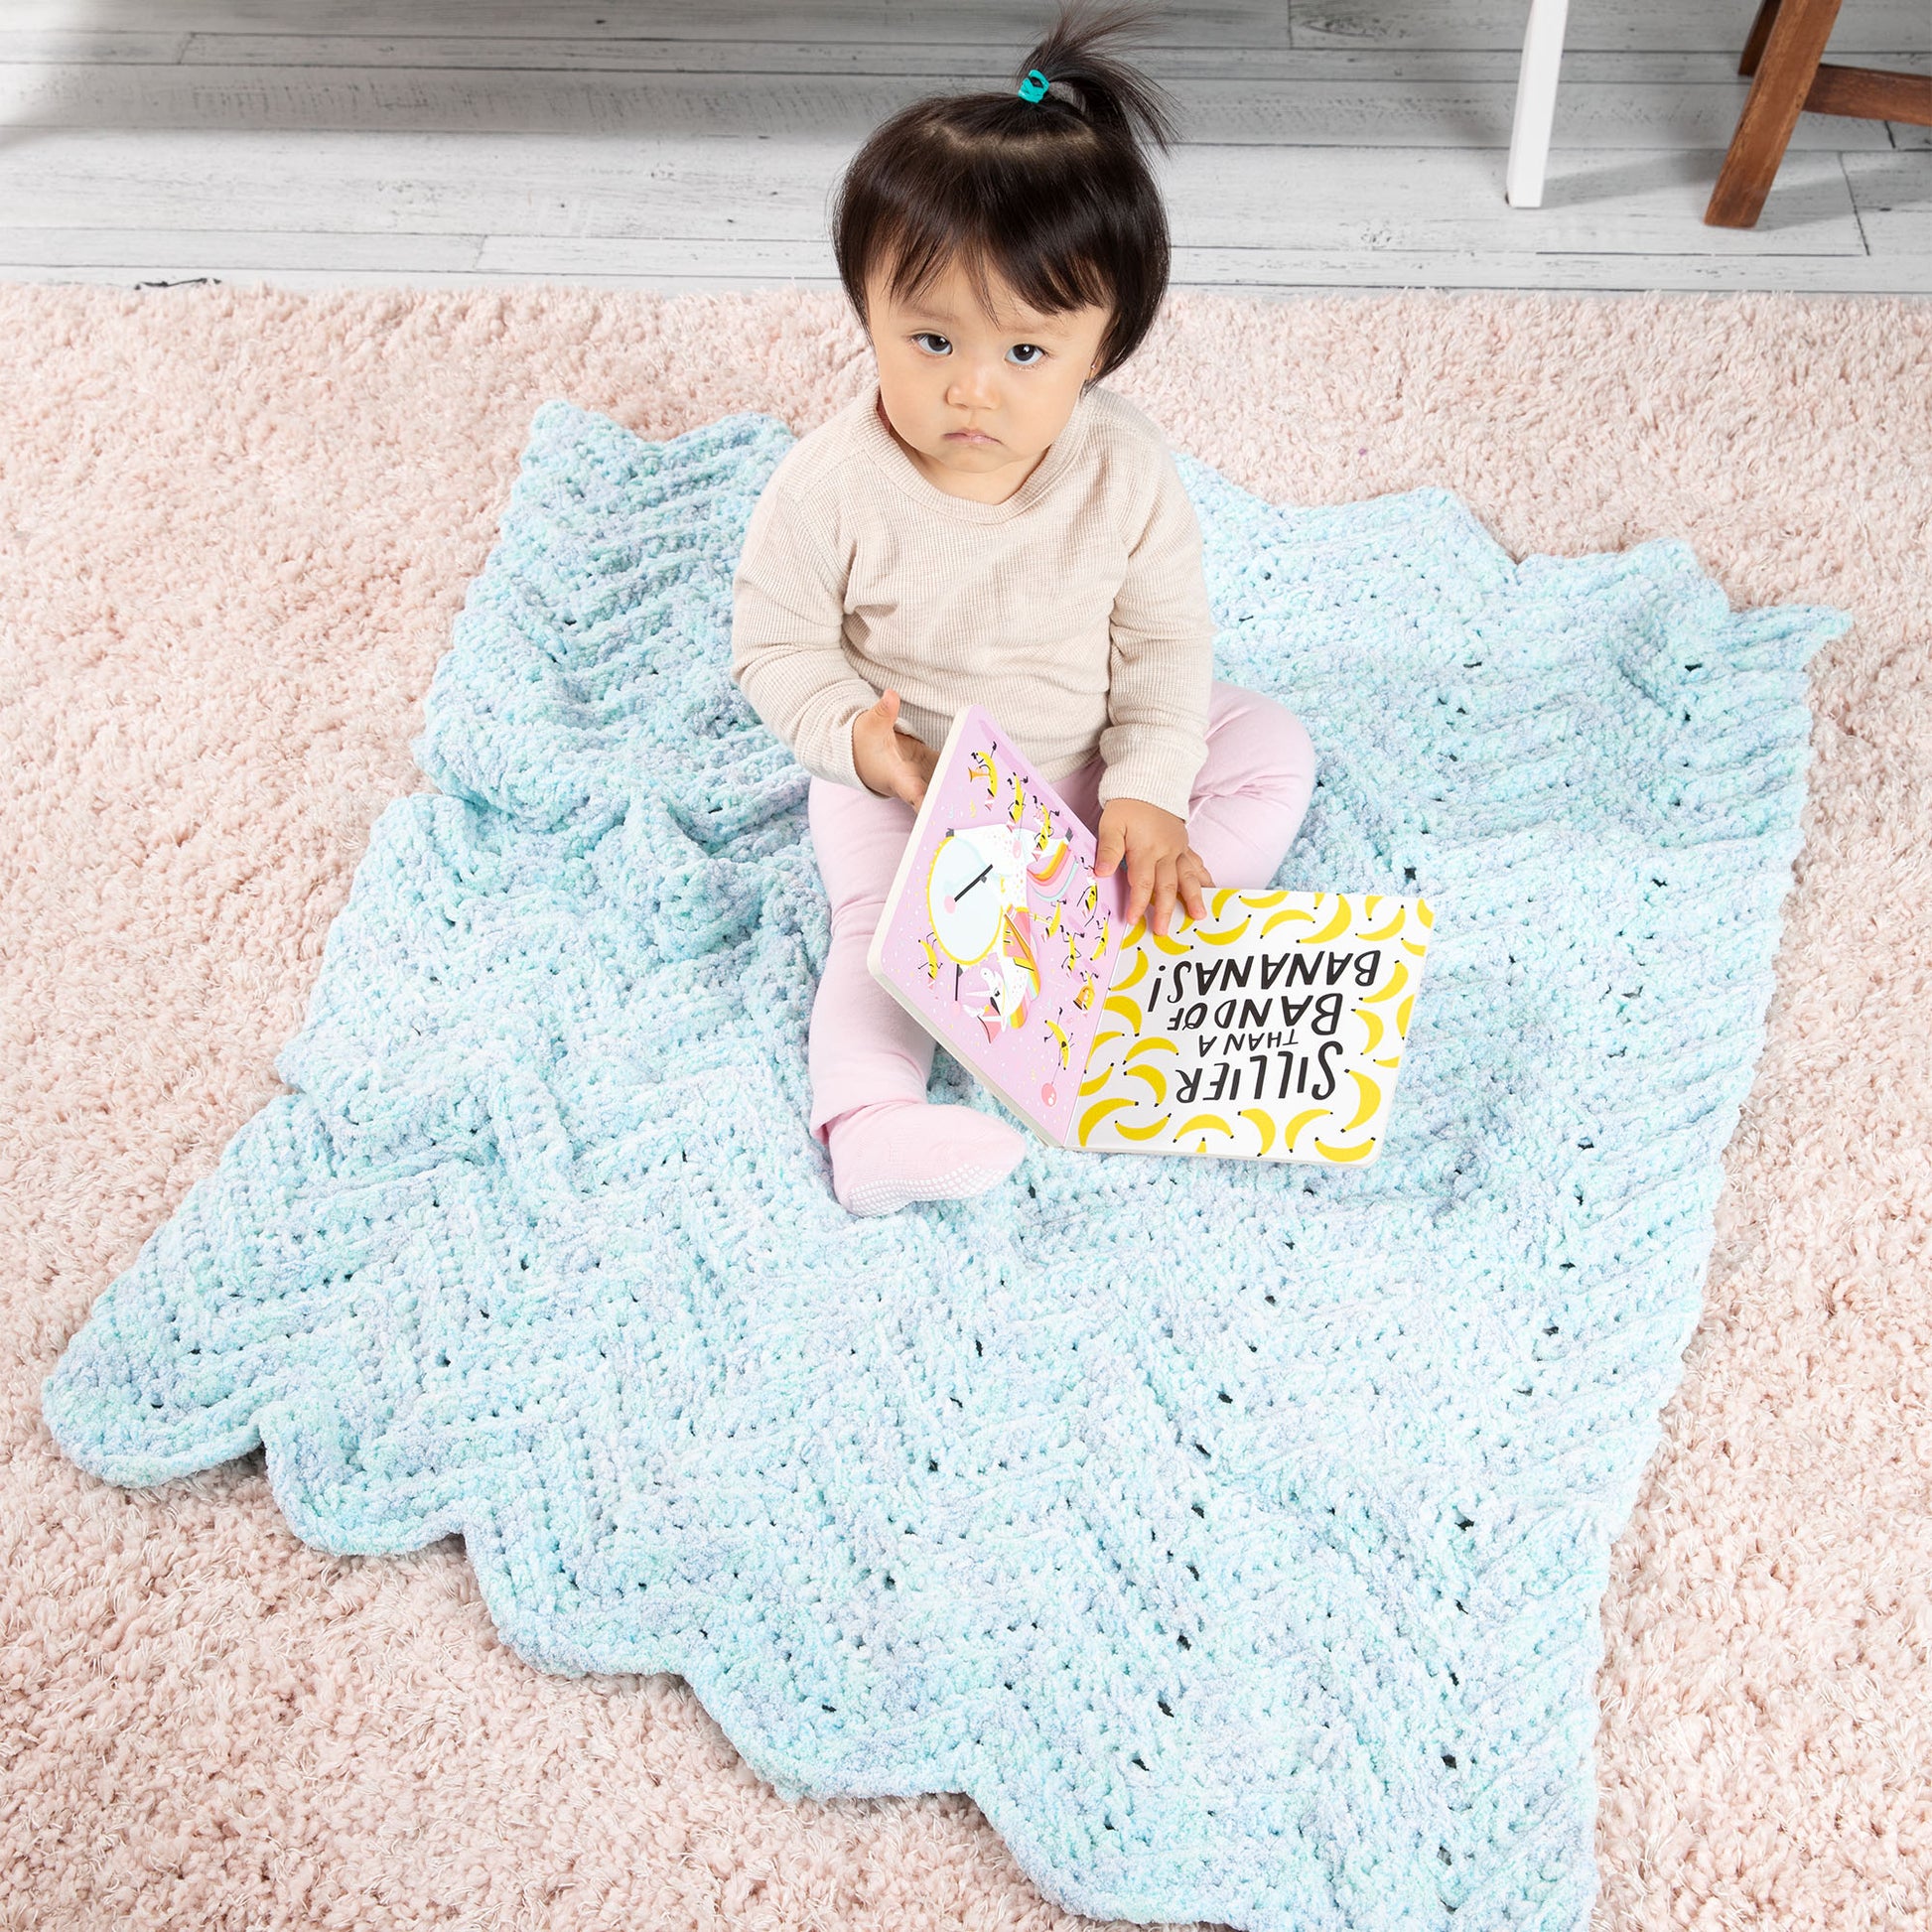 Bernat Baby Ripple Crochet Blanket Crochet  made in Bernat Baby Blanket Frosting yarn